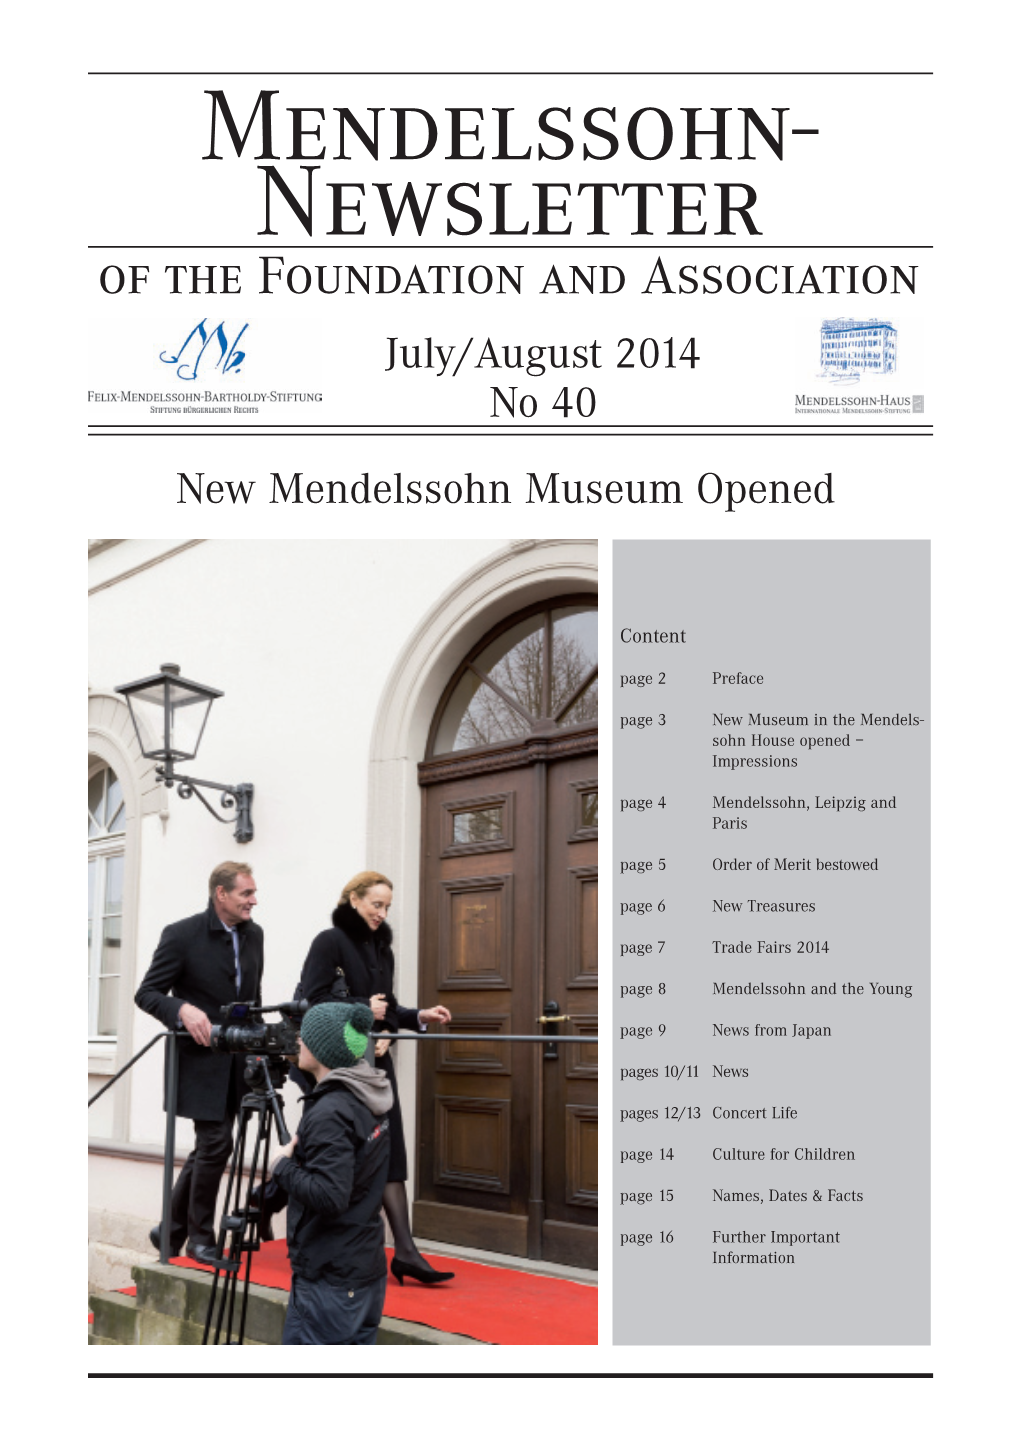 Mendelssohn- Newsletter of the Foundation and Association July/August 2014 No 40 New Mendelssohn Museum Opened